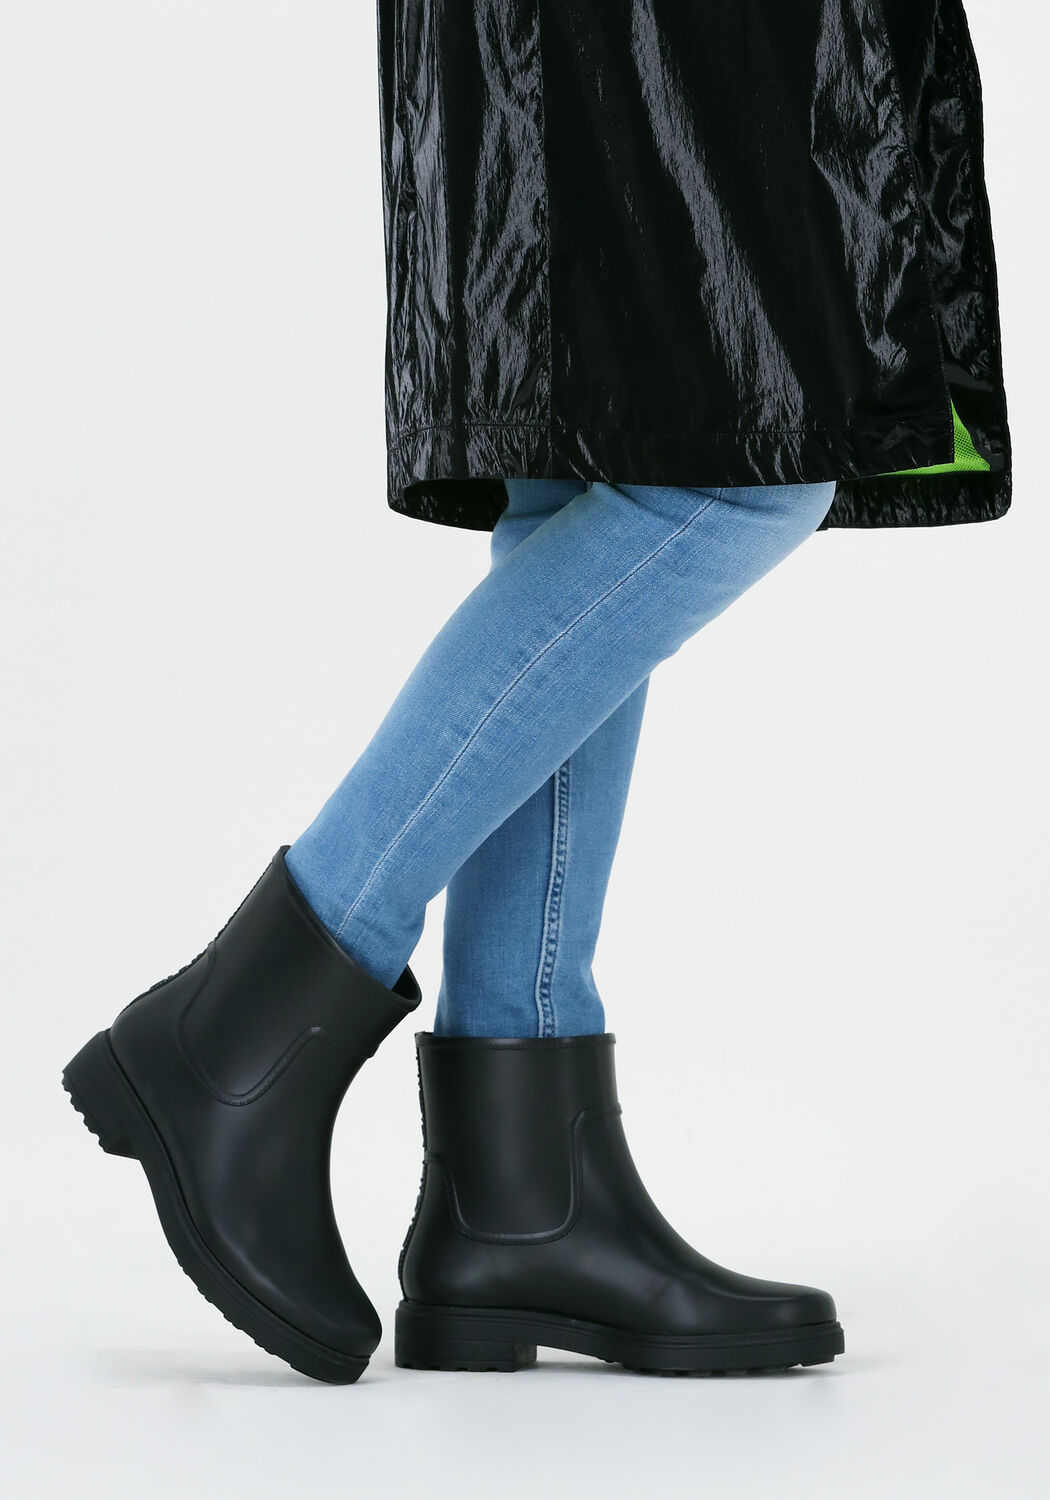 & Sneeuwlaarzen Schoenen damesschoenen Laarzen Regen Women's Black Rubber Rain Boot 